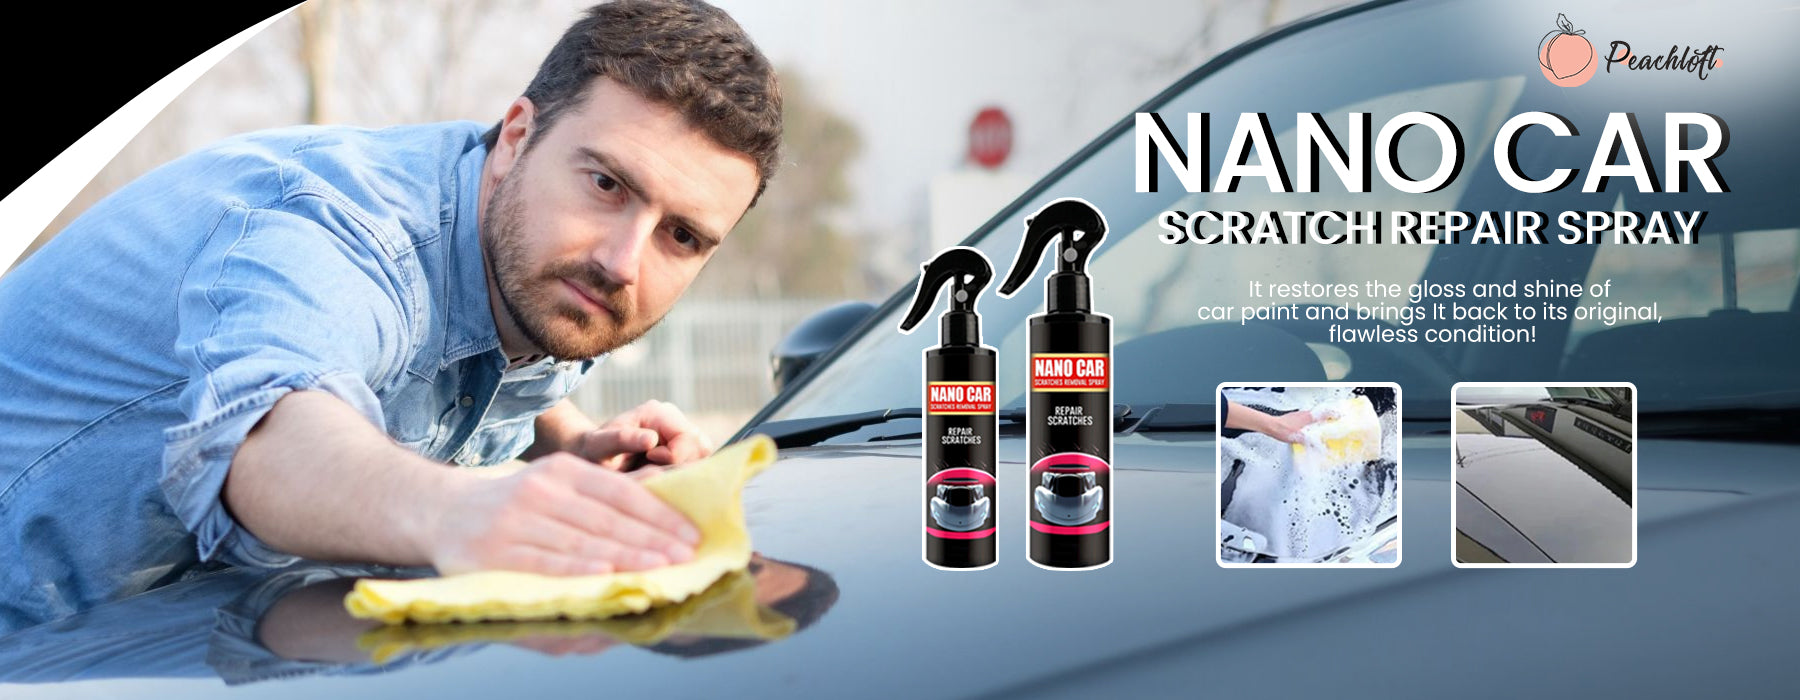 Peachloft Nano Car Scratch Repair Spray, Nano Car Scratch Removal Spray,  MagicRepair Auto-Nano-Reparatur Spray, Car Coating Spray, Car Scuff and